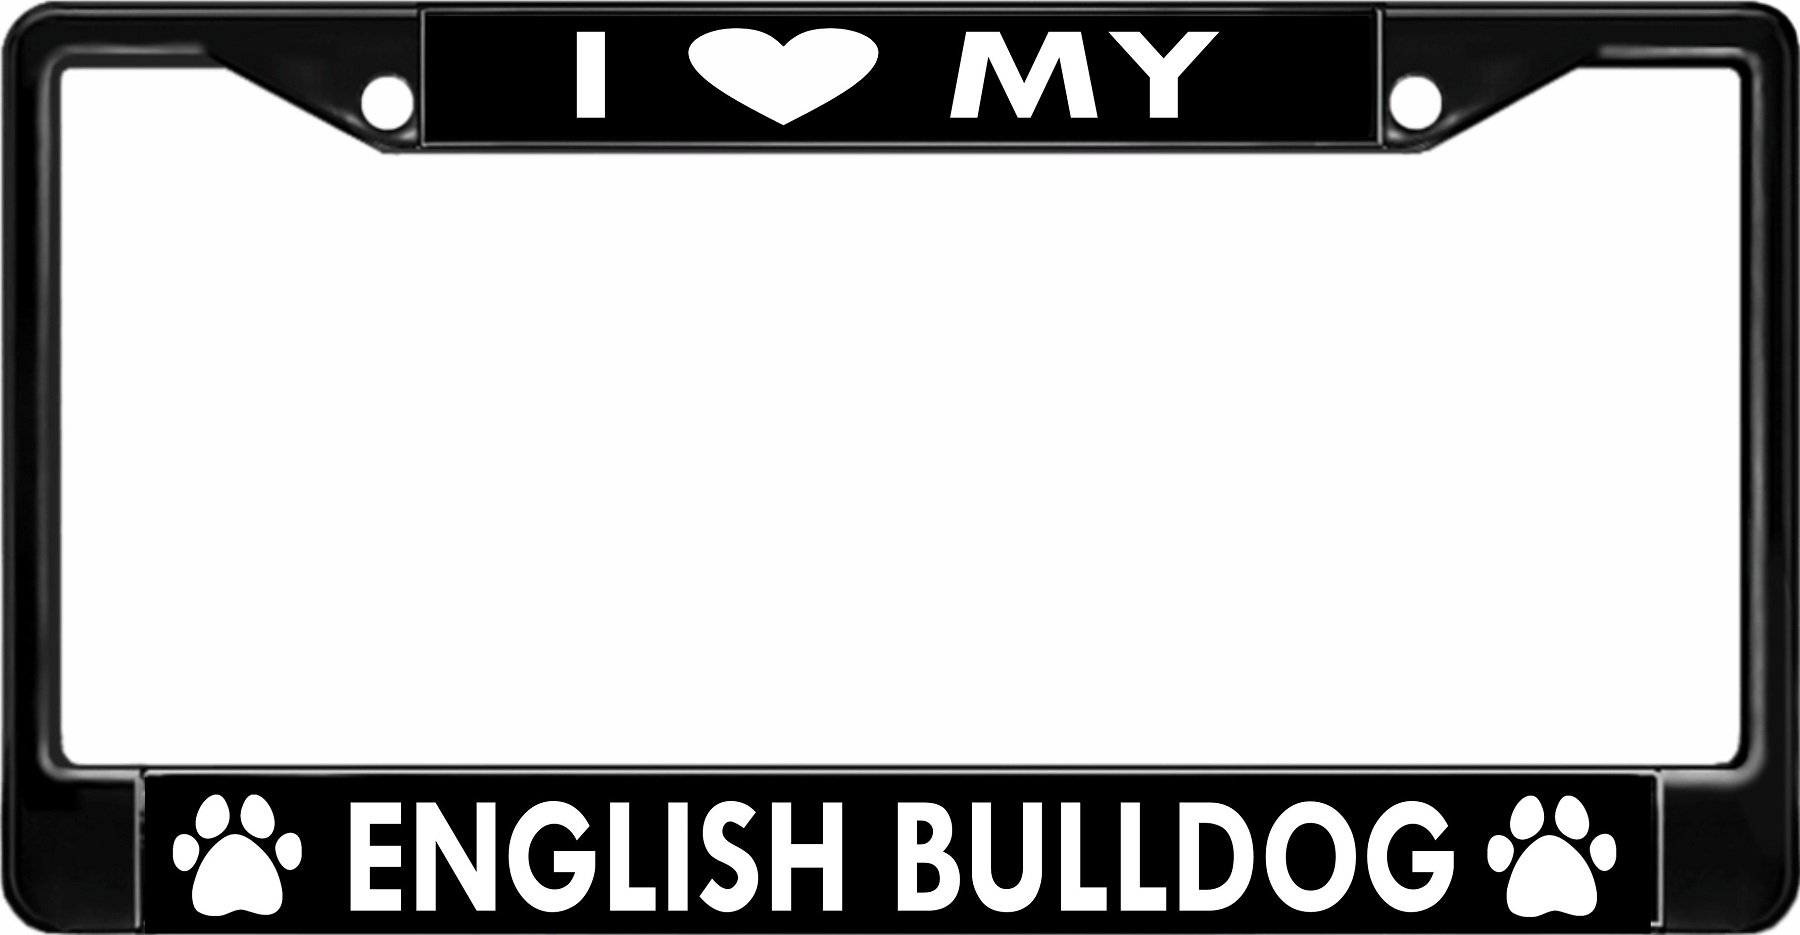 I Love My English Bulldog Black License Plate FRAME